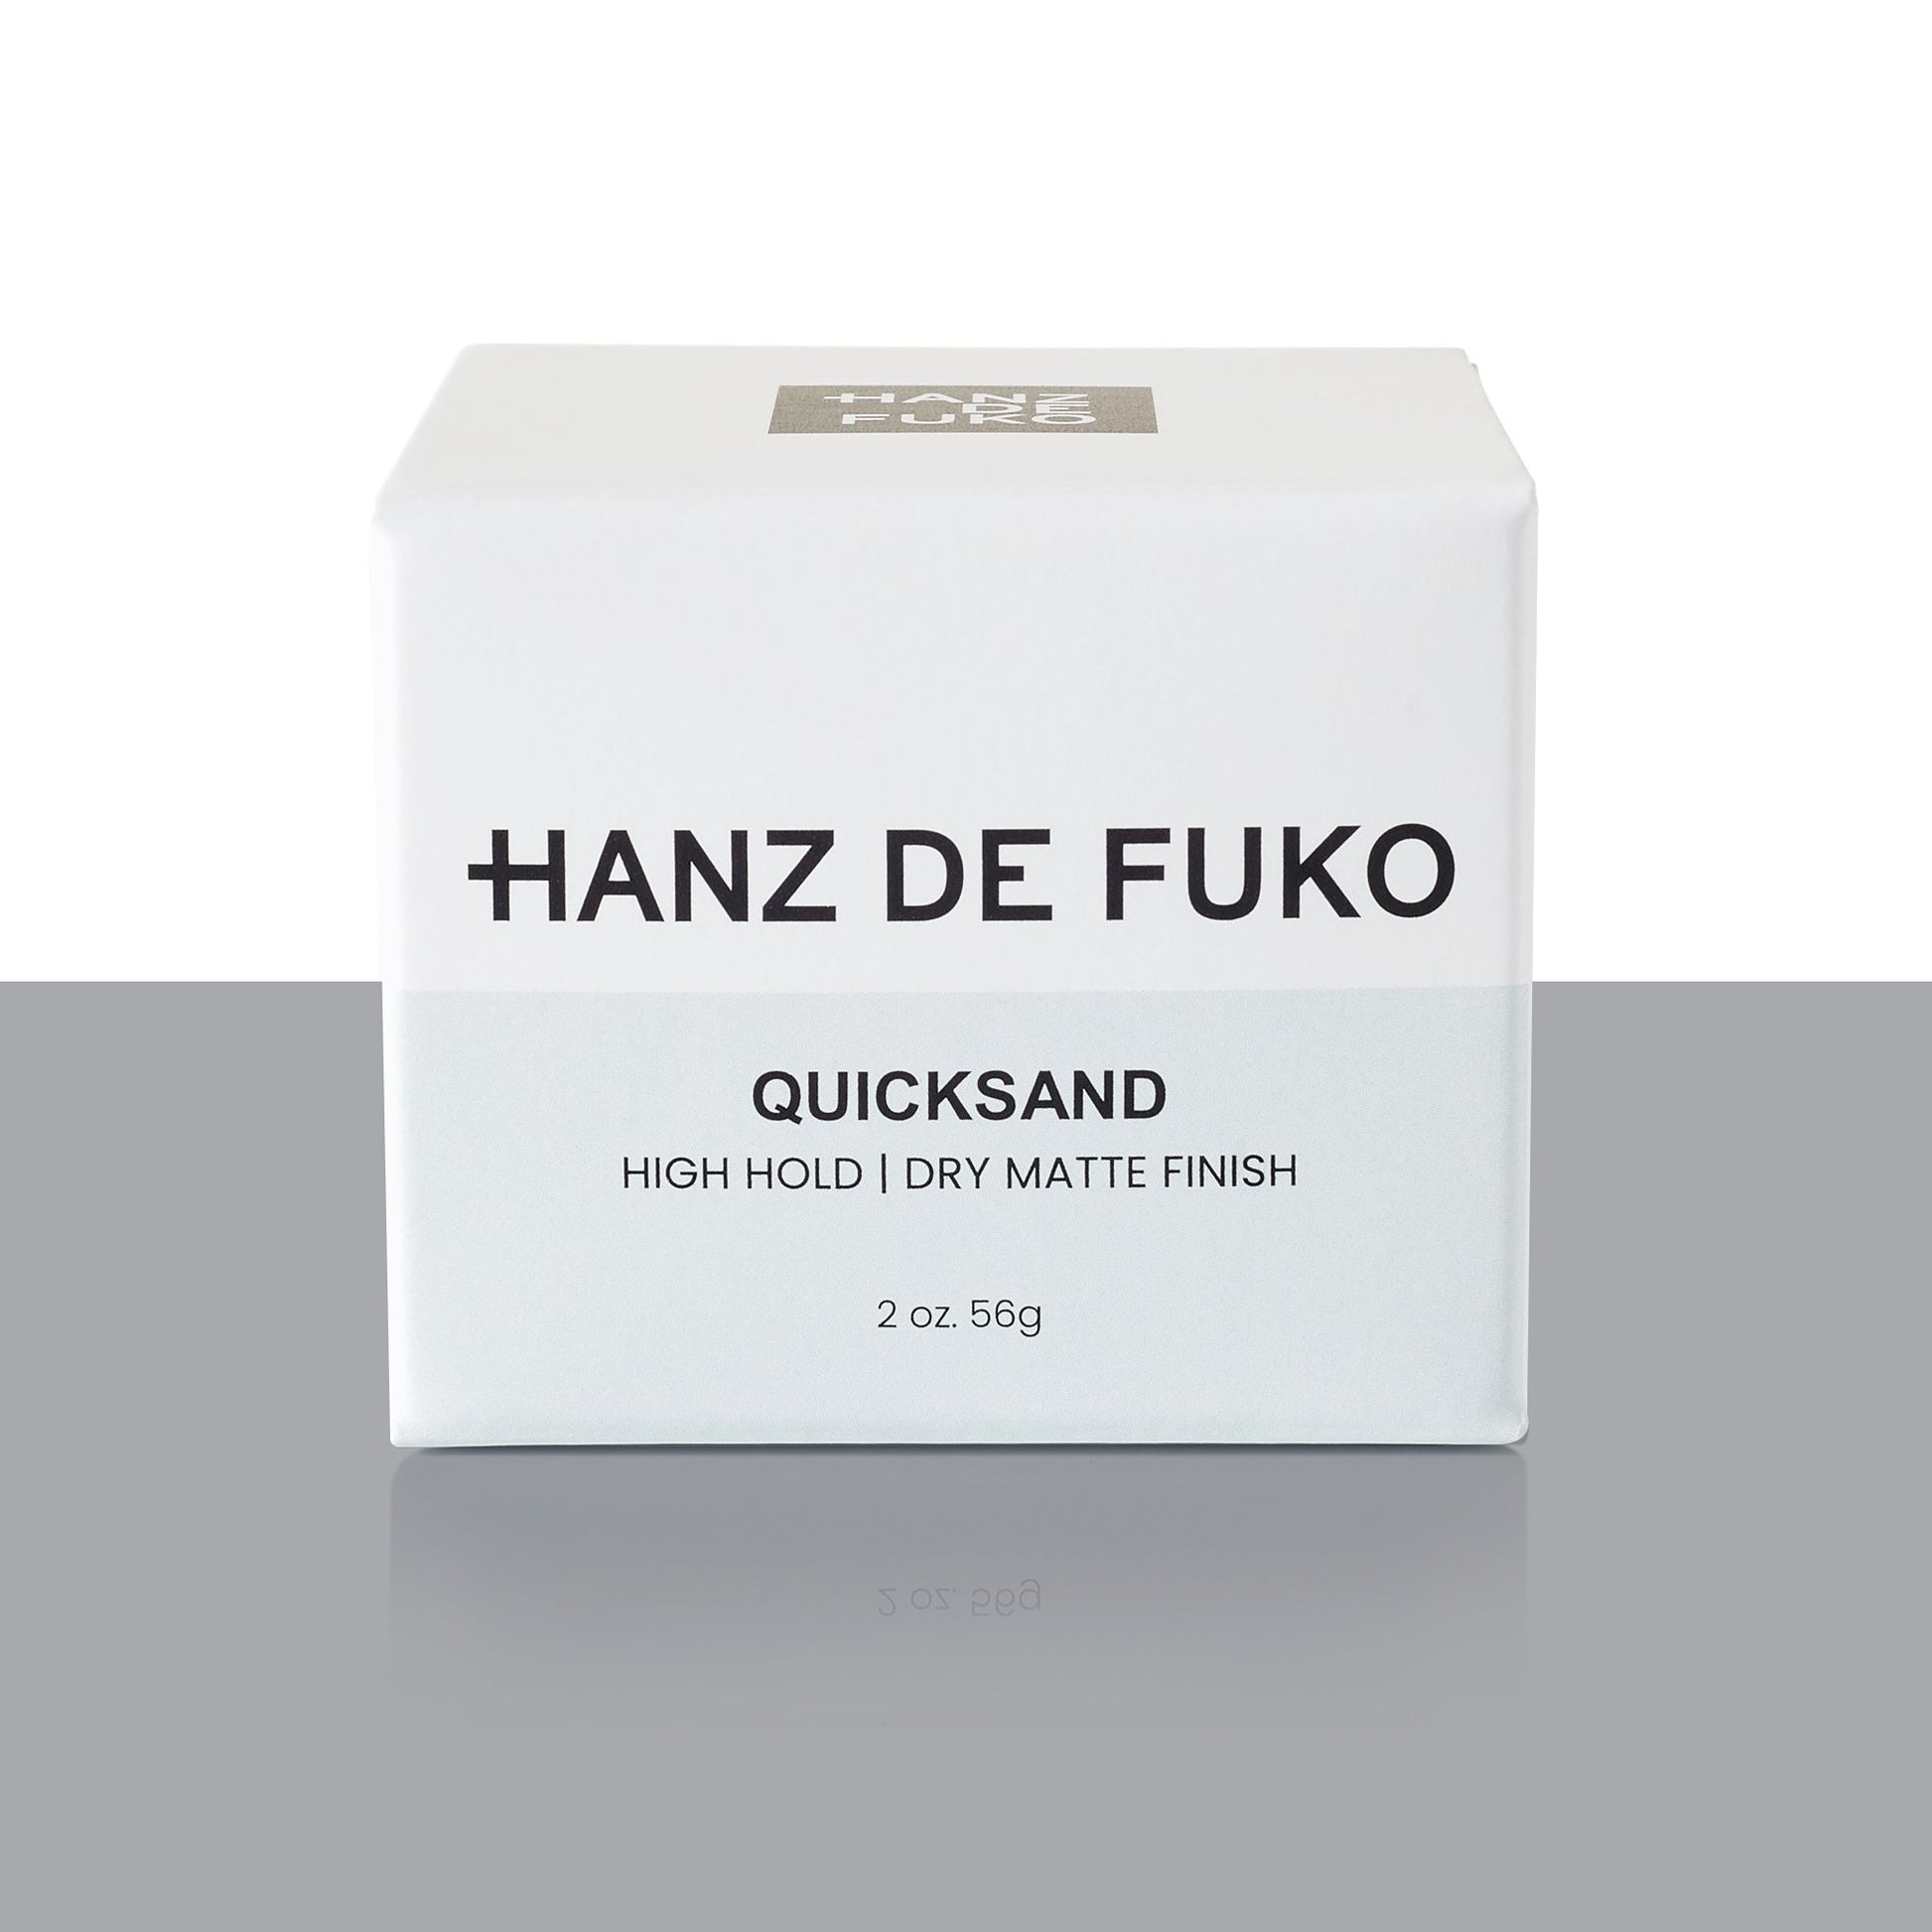 Hanz de Fuko Quicksand - Masen Products (Pty) LTD